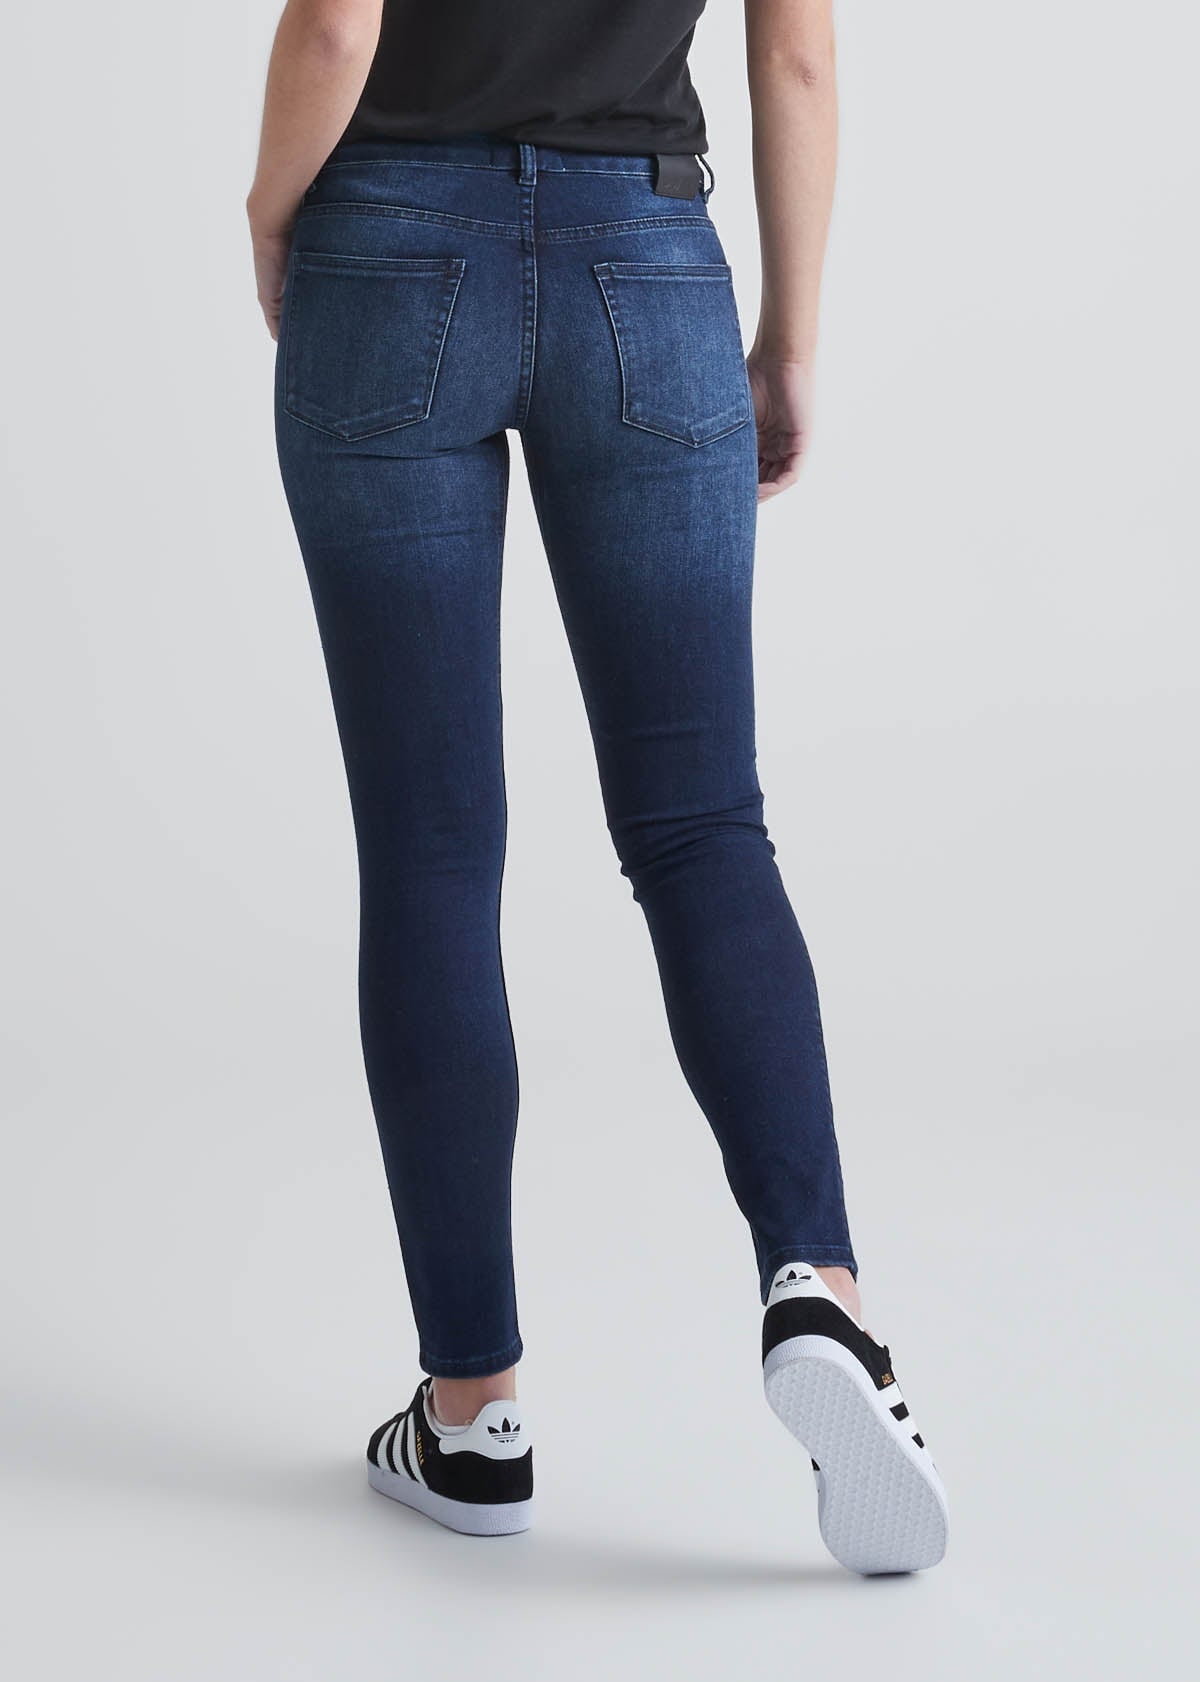 Women's Skinny Fit Stretch Jeans